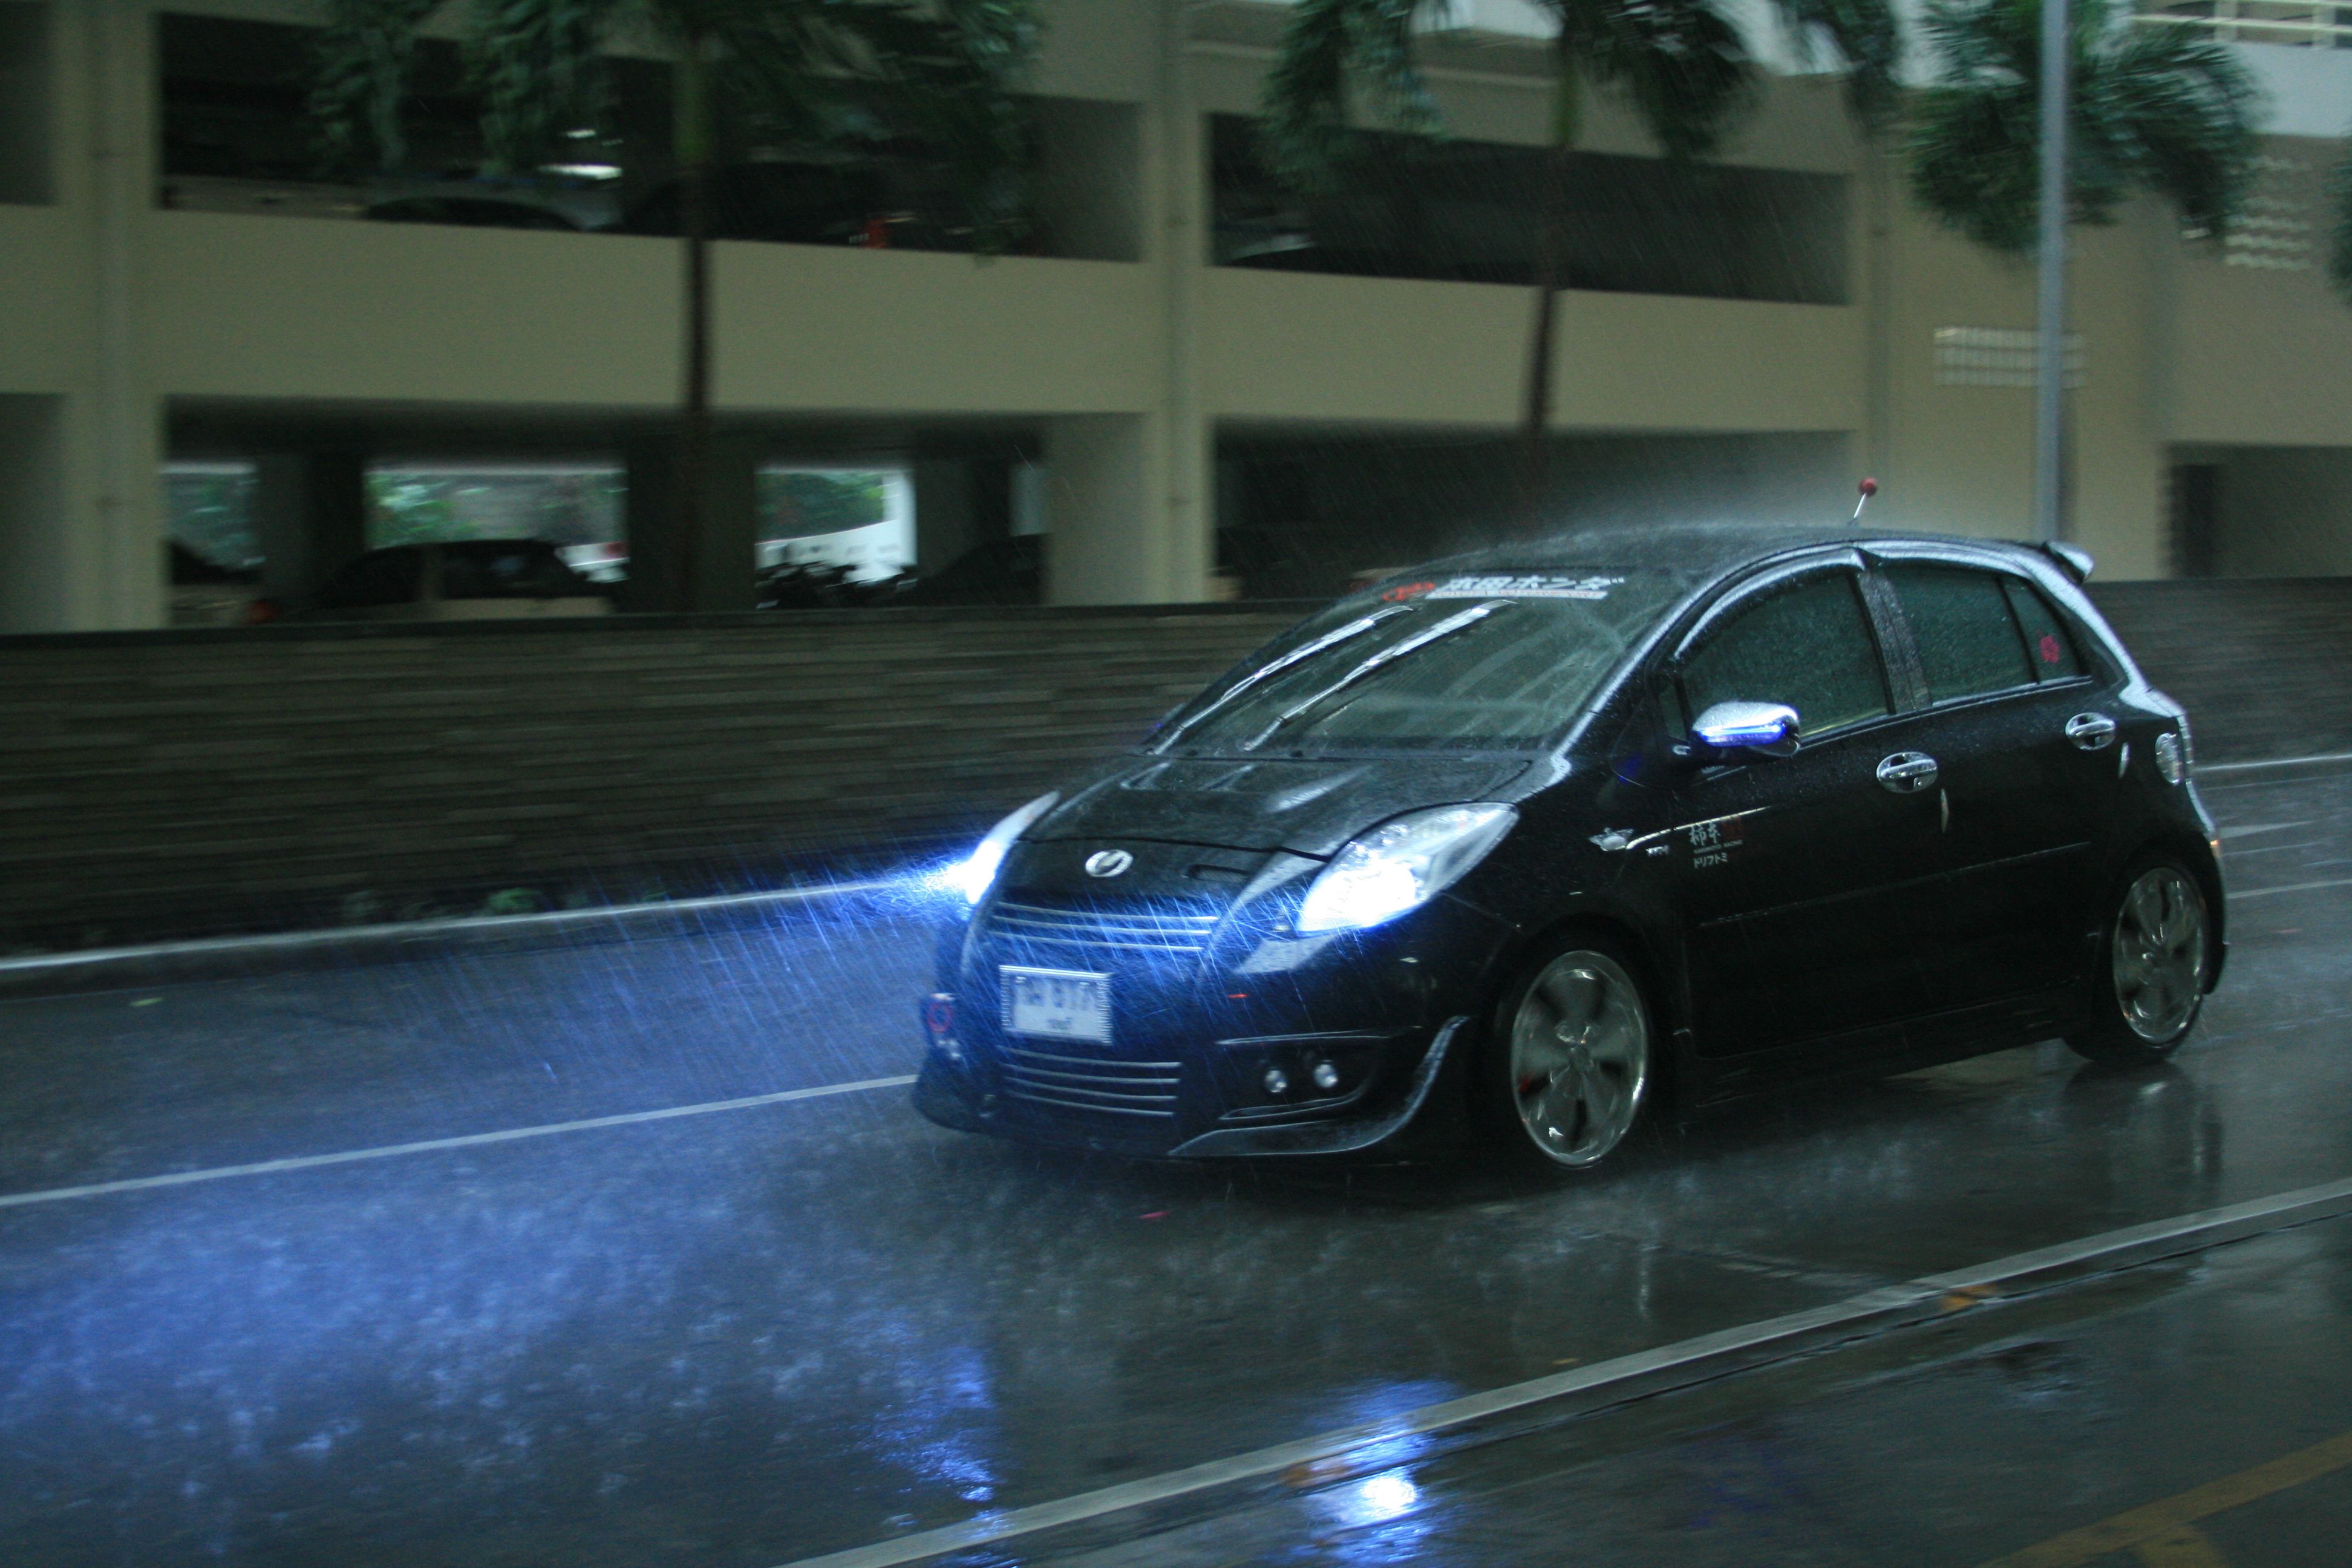 Free download 4K wallpaper Cars Rain rides pools Toyota Yaris car